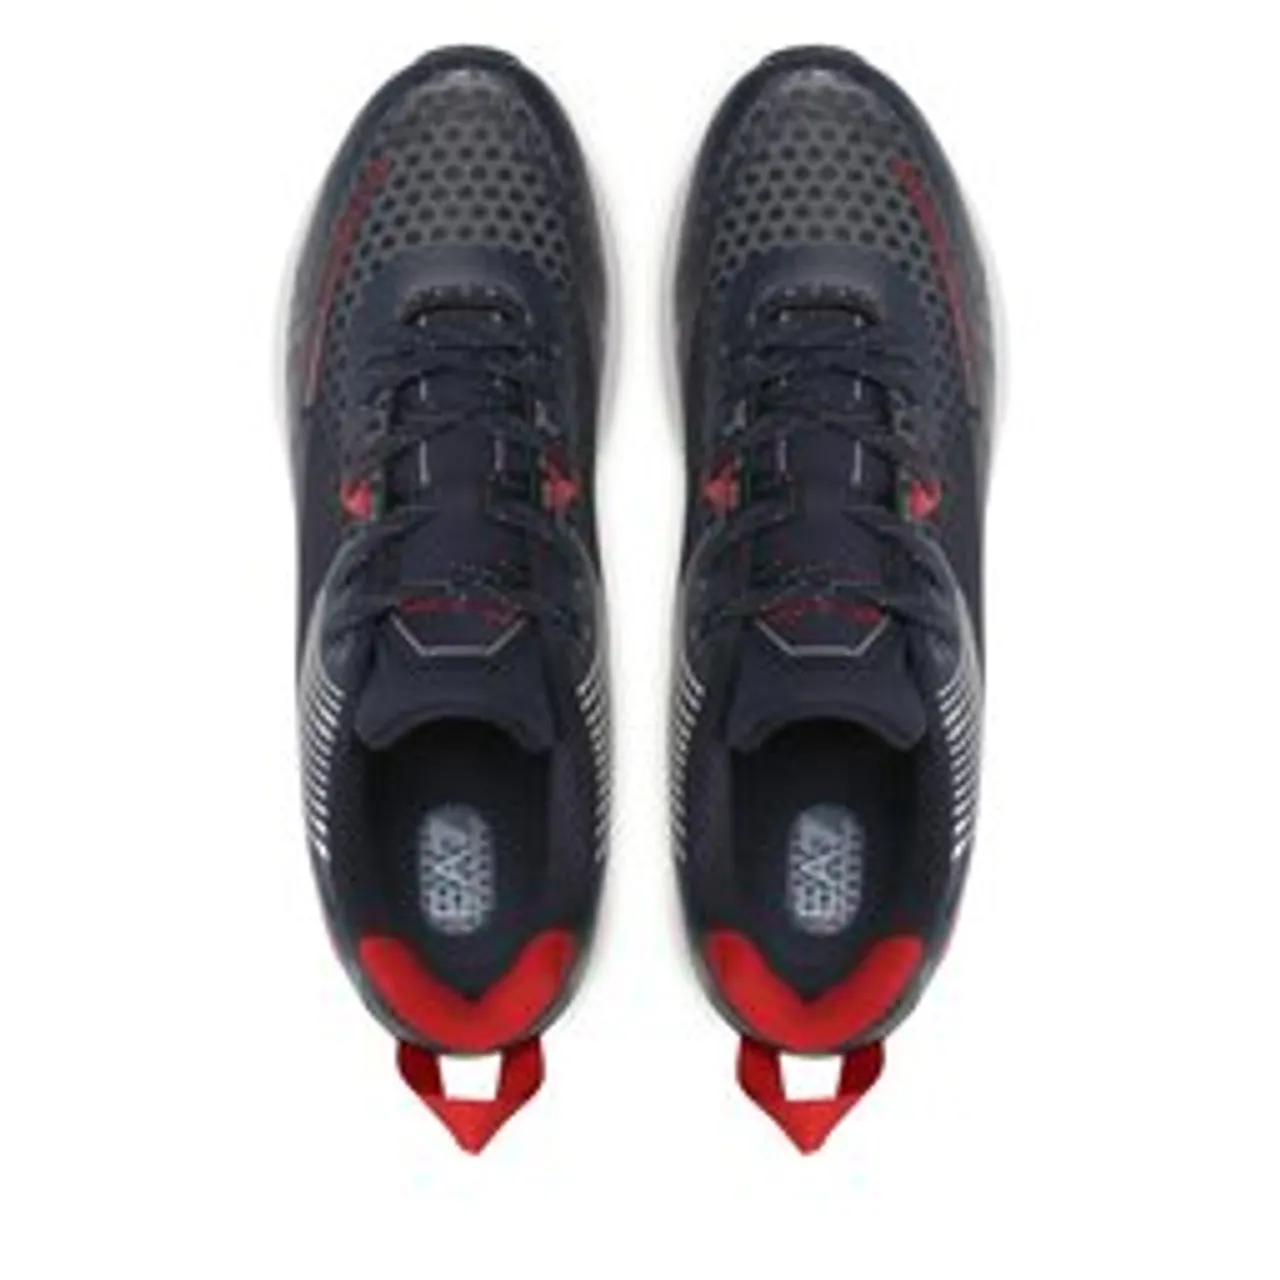 Sneakers EA7 Emporio Armani X8X093 XK238 S329 Blk Iris/Rac.Red/Wht